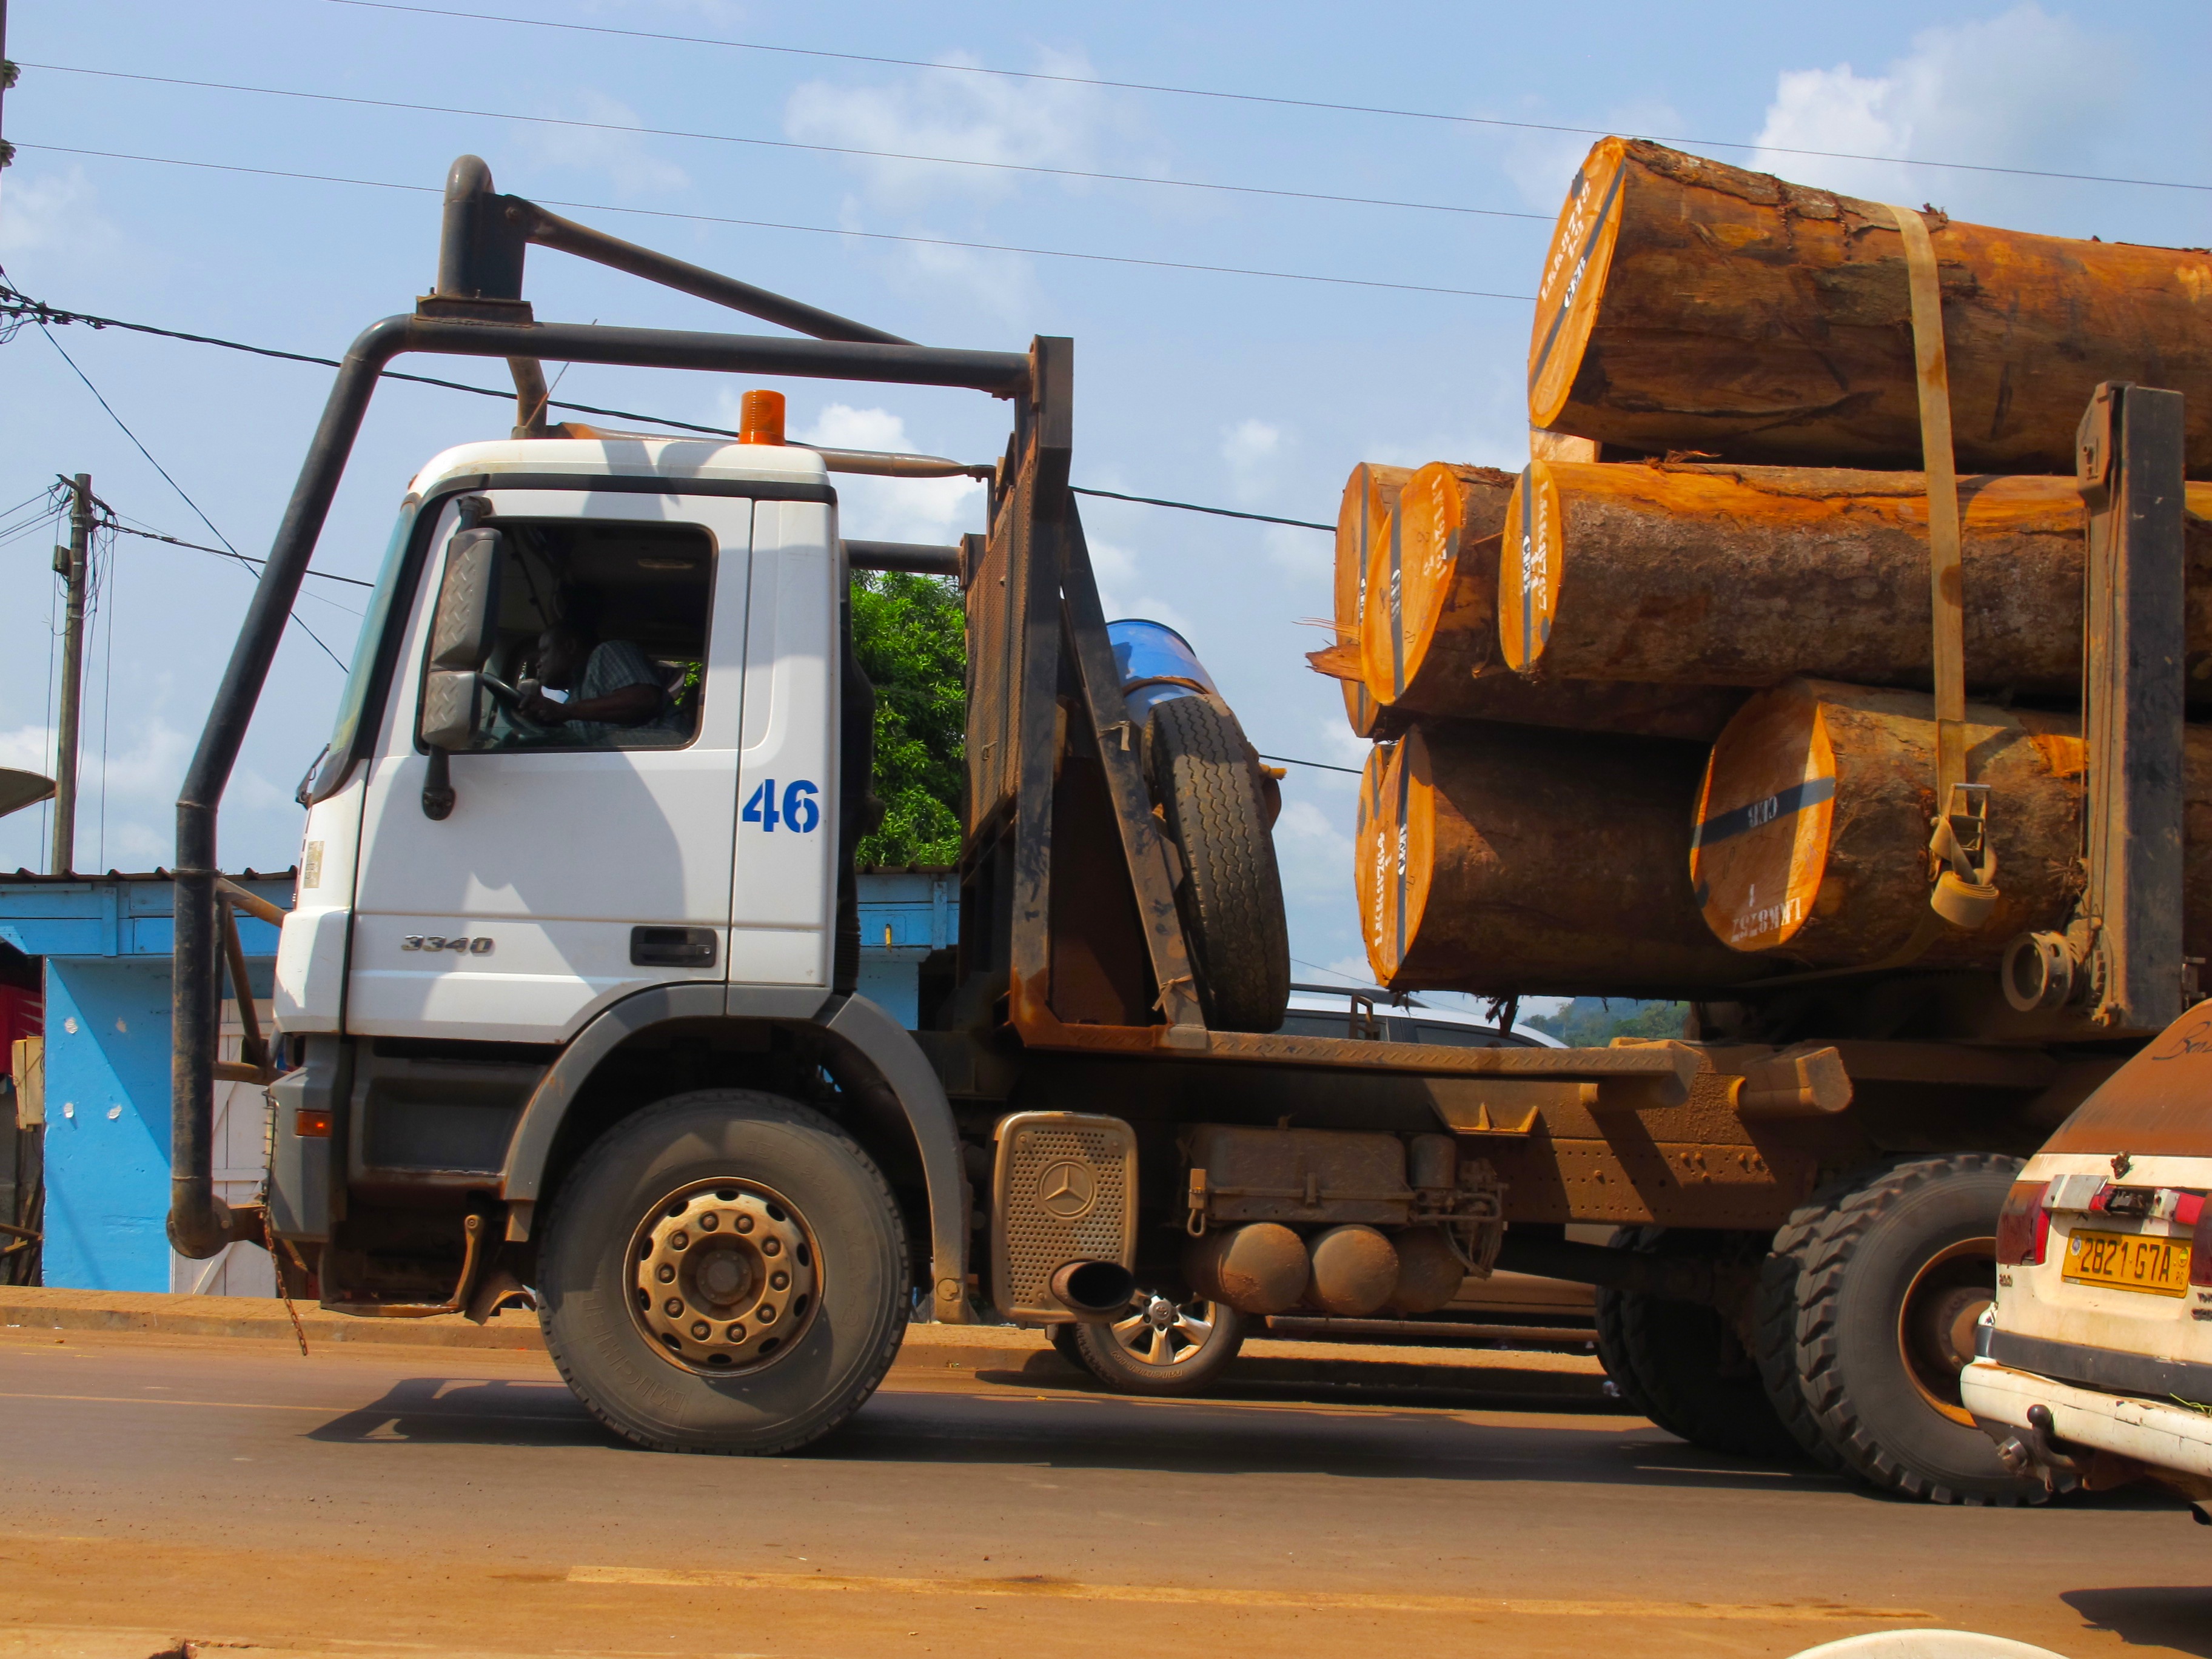 Logging truck in Lastourville, Gabon